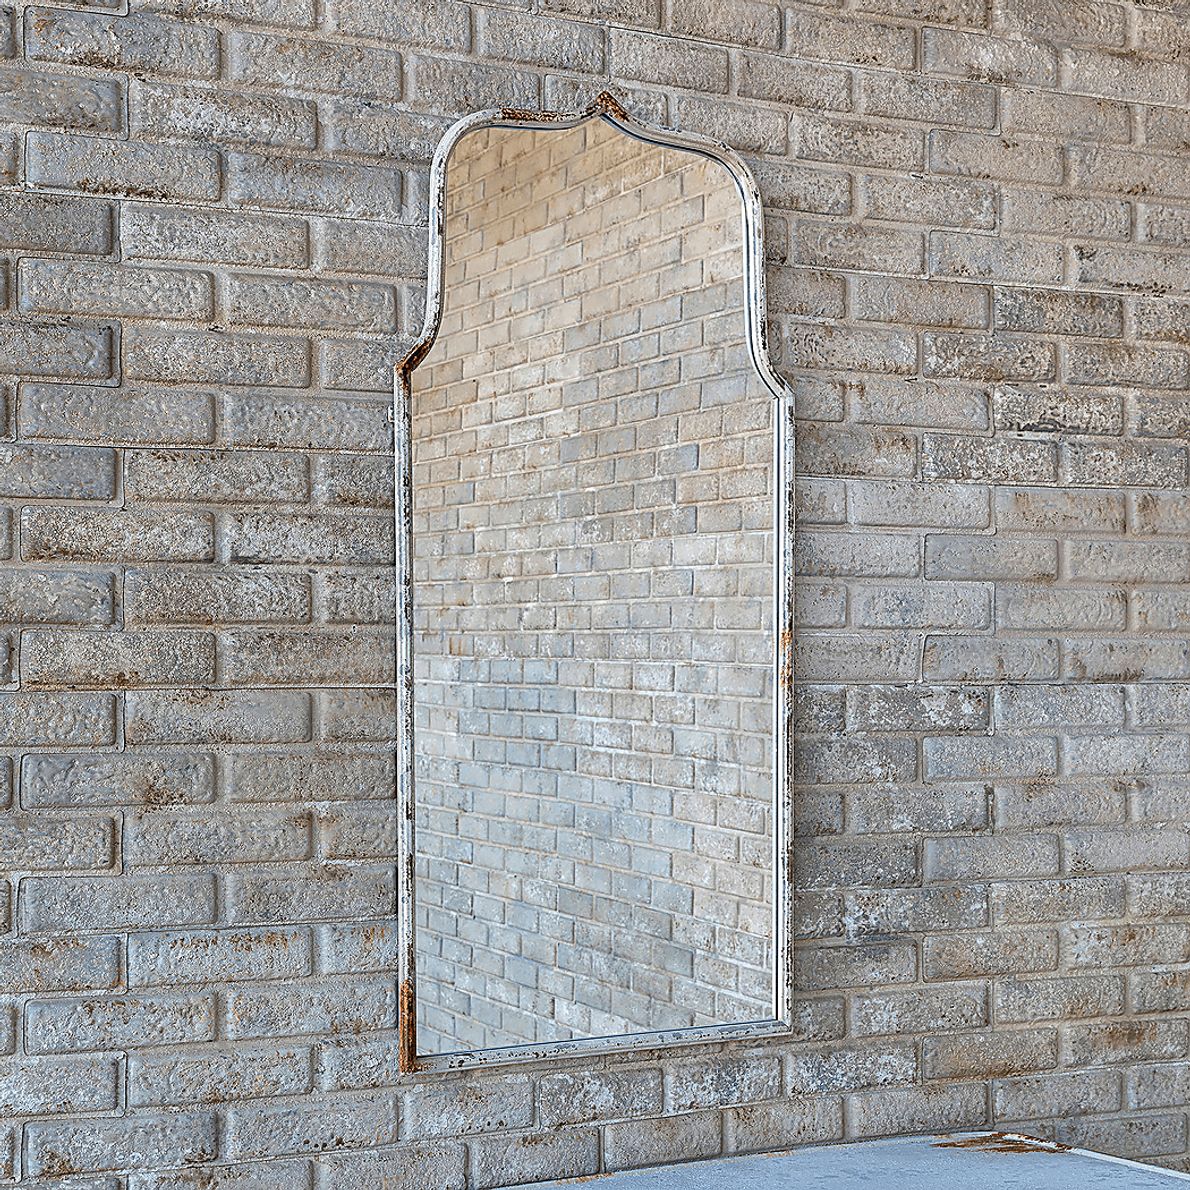 Aintree White Wall Mirror